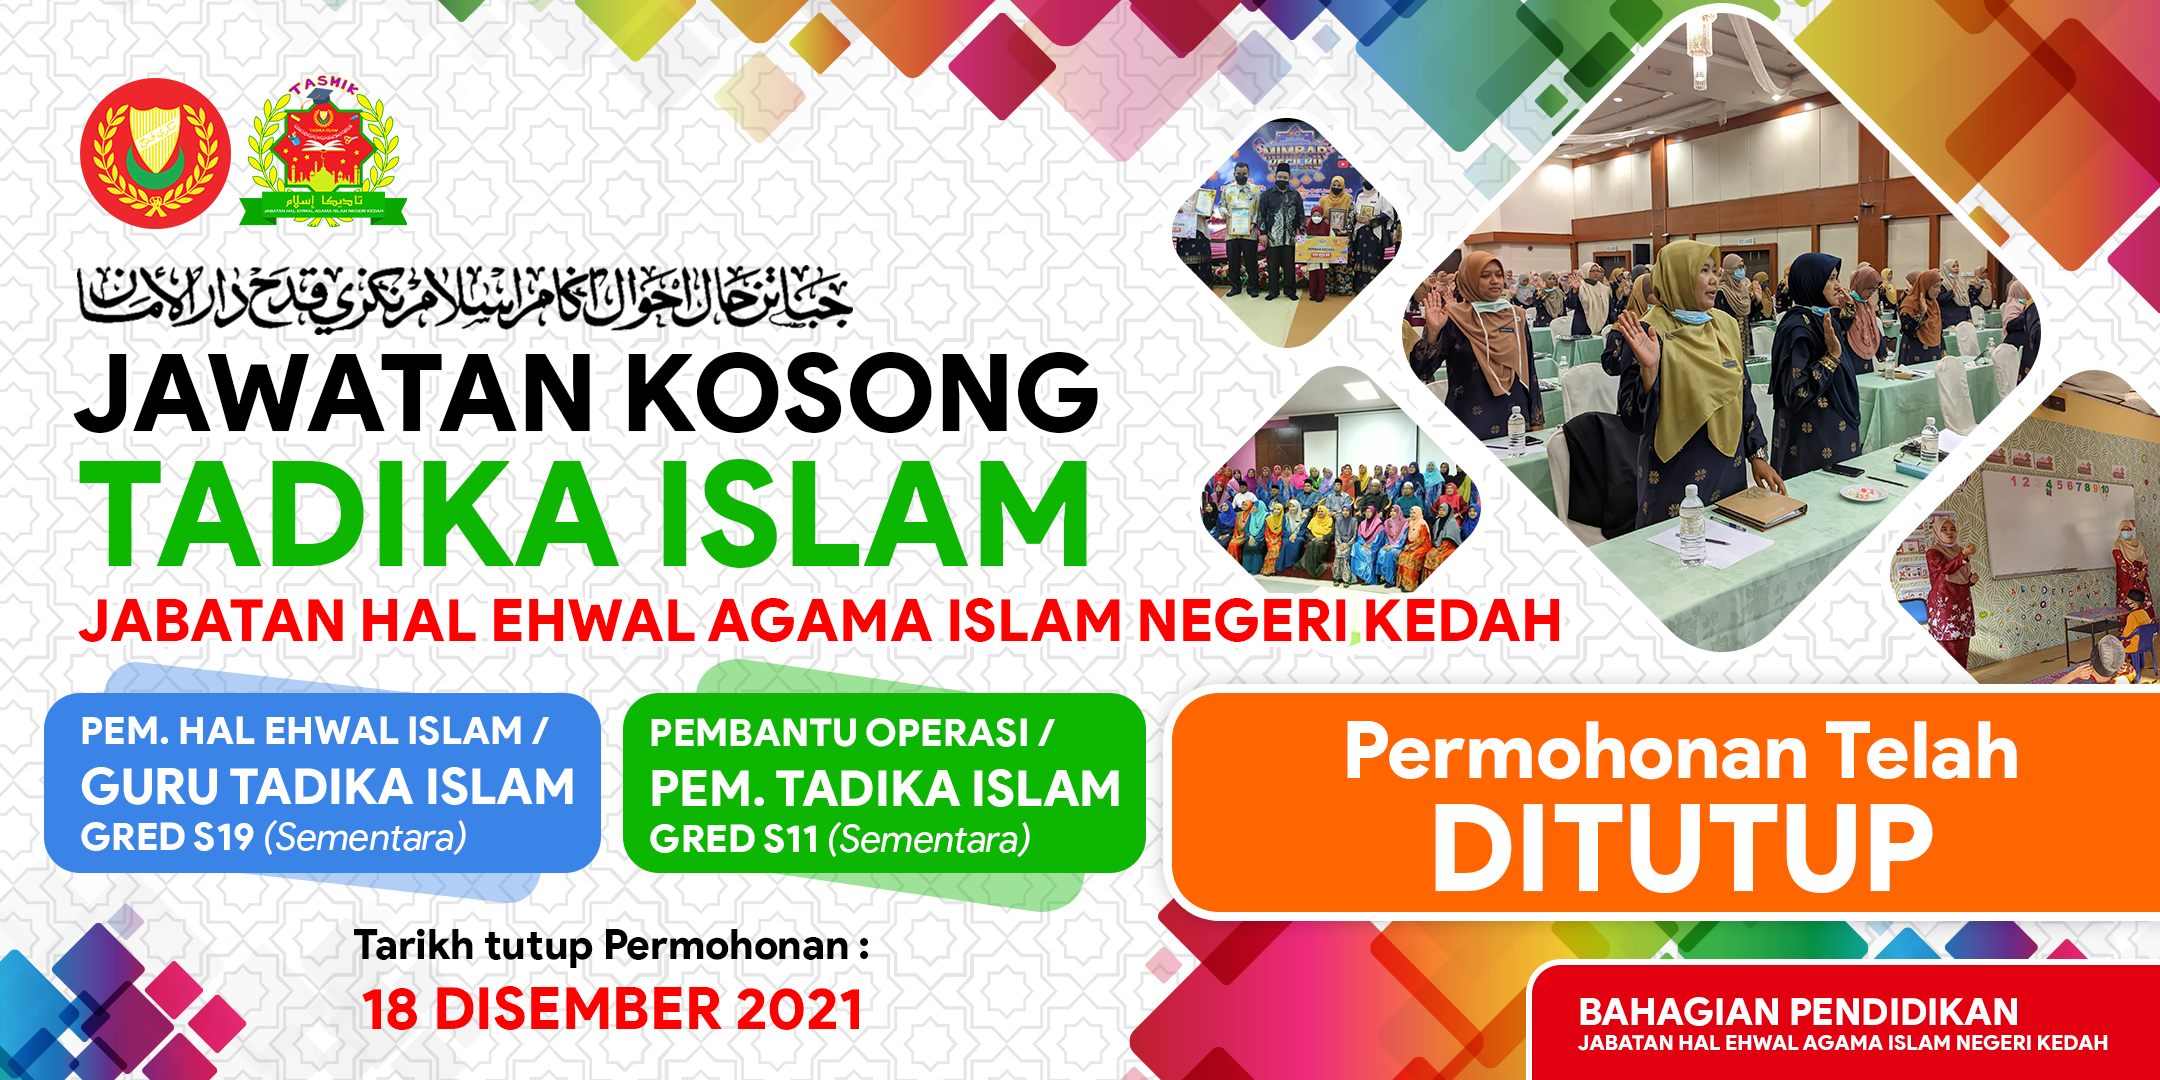 Jheaik Https Jheaik Kedah Gov My Portal Rasmi Jabatan Hal Ehwal Agama Islam Negeri Kedah